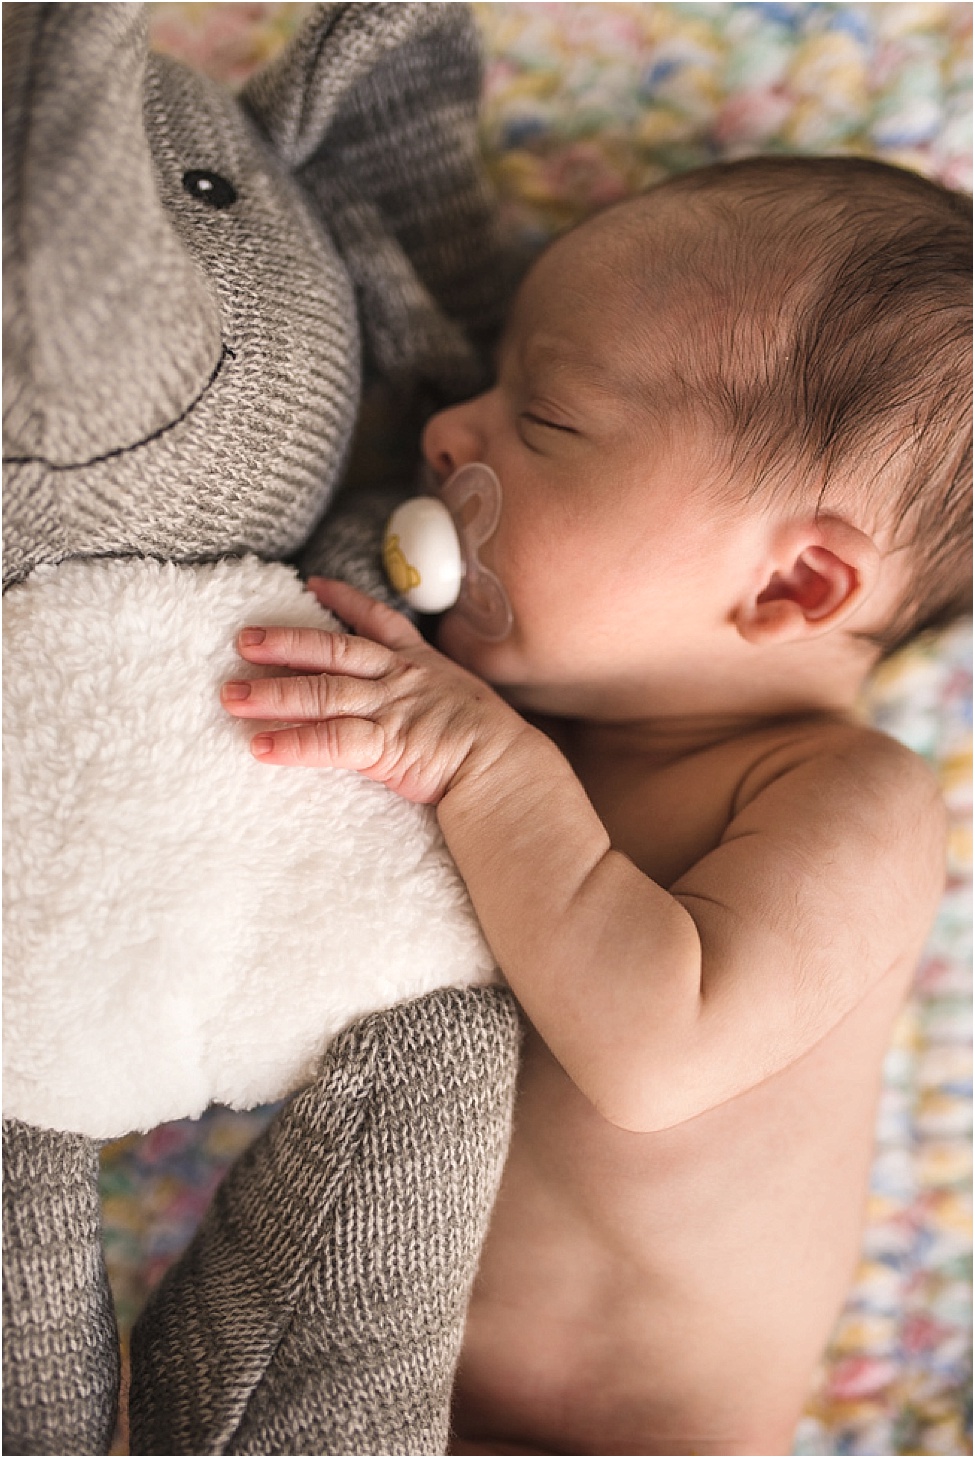 Home newborn family session | Jacksonville baby photographer